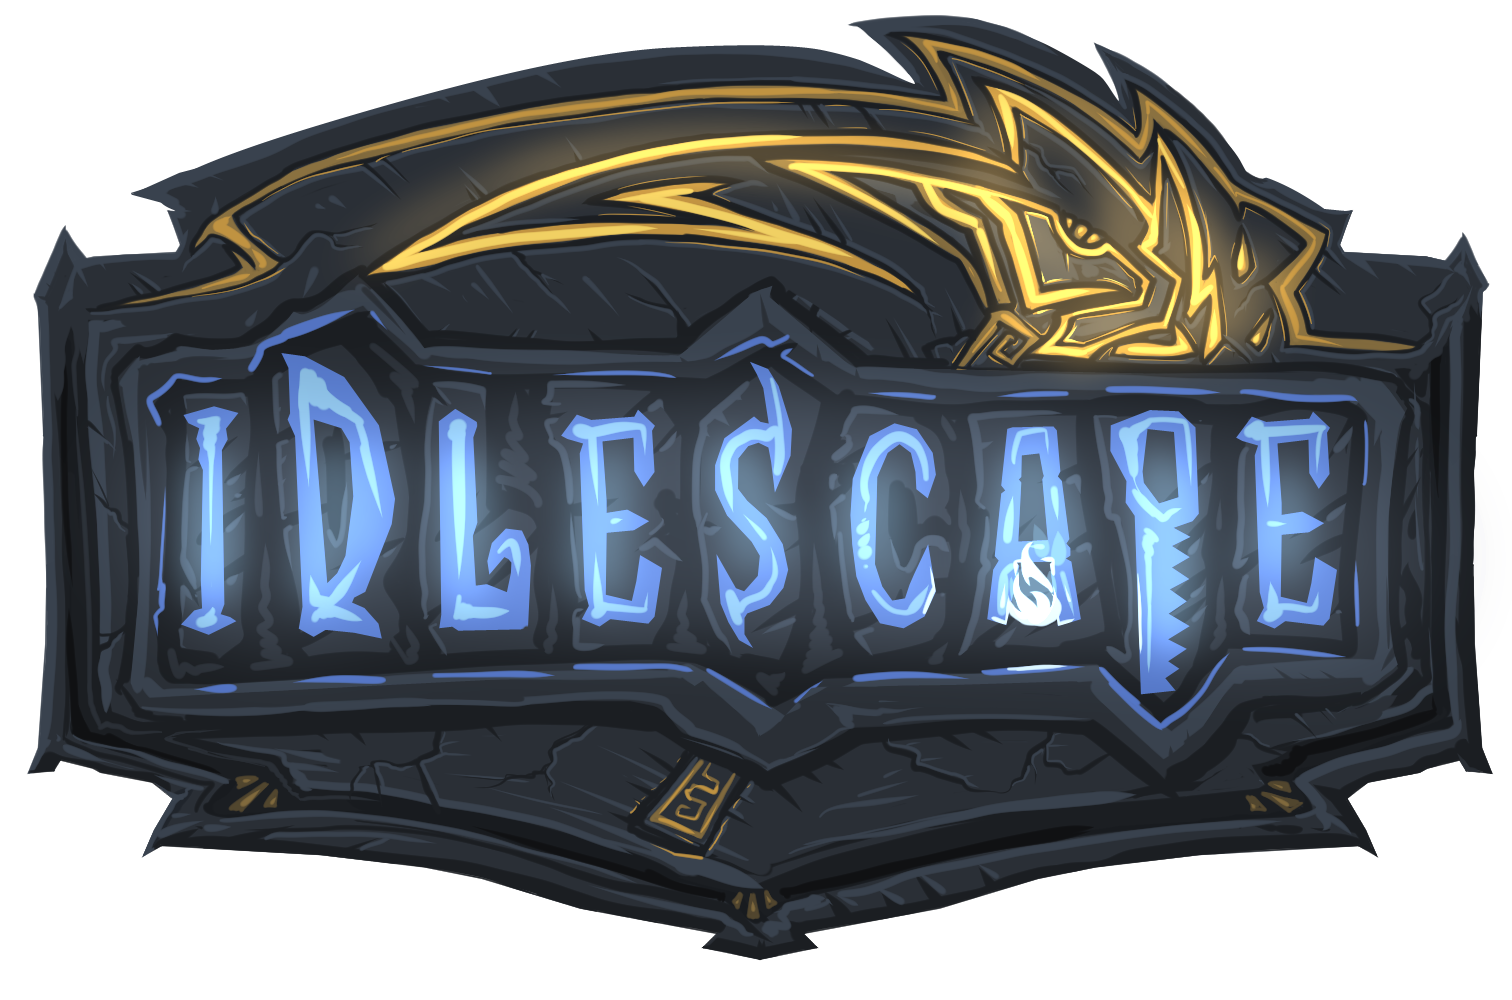 Idlescape Logo